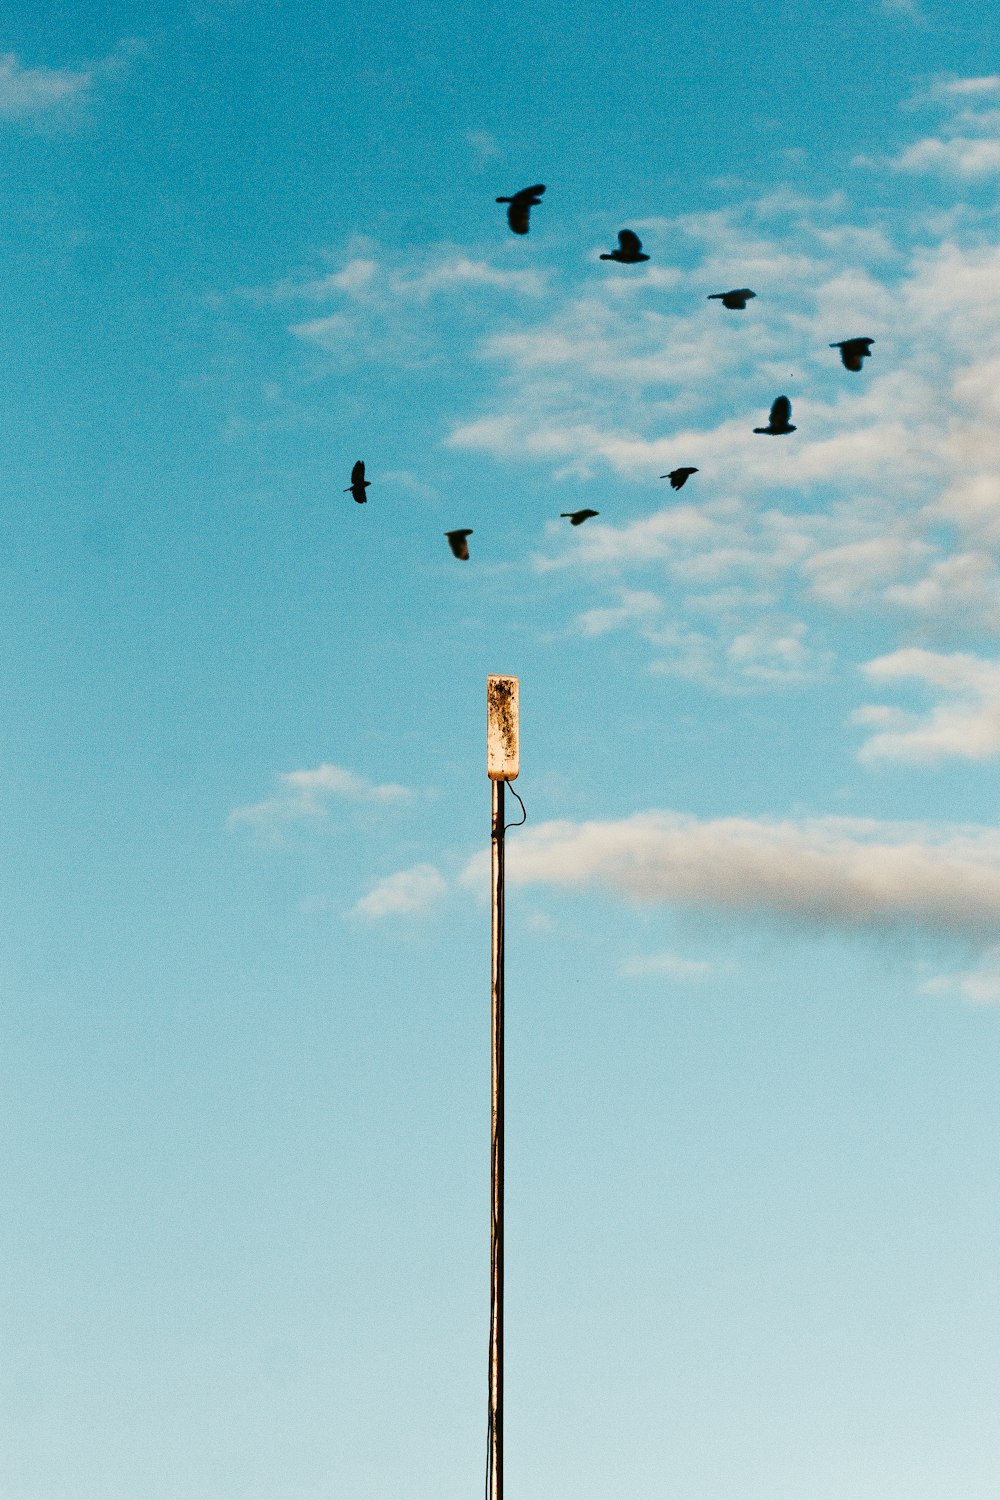 a group of birds fly through the air